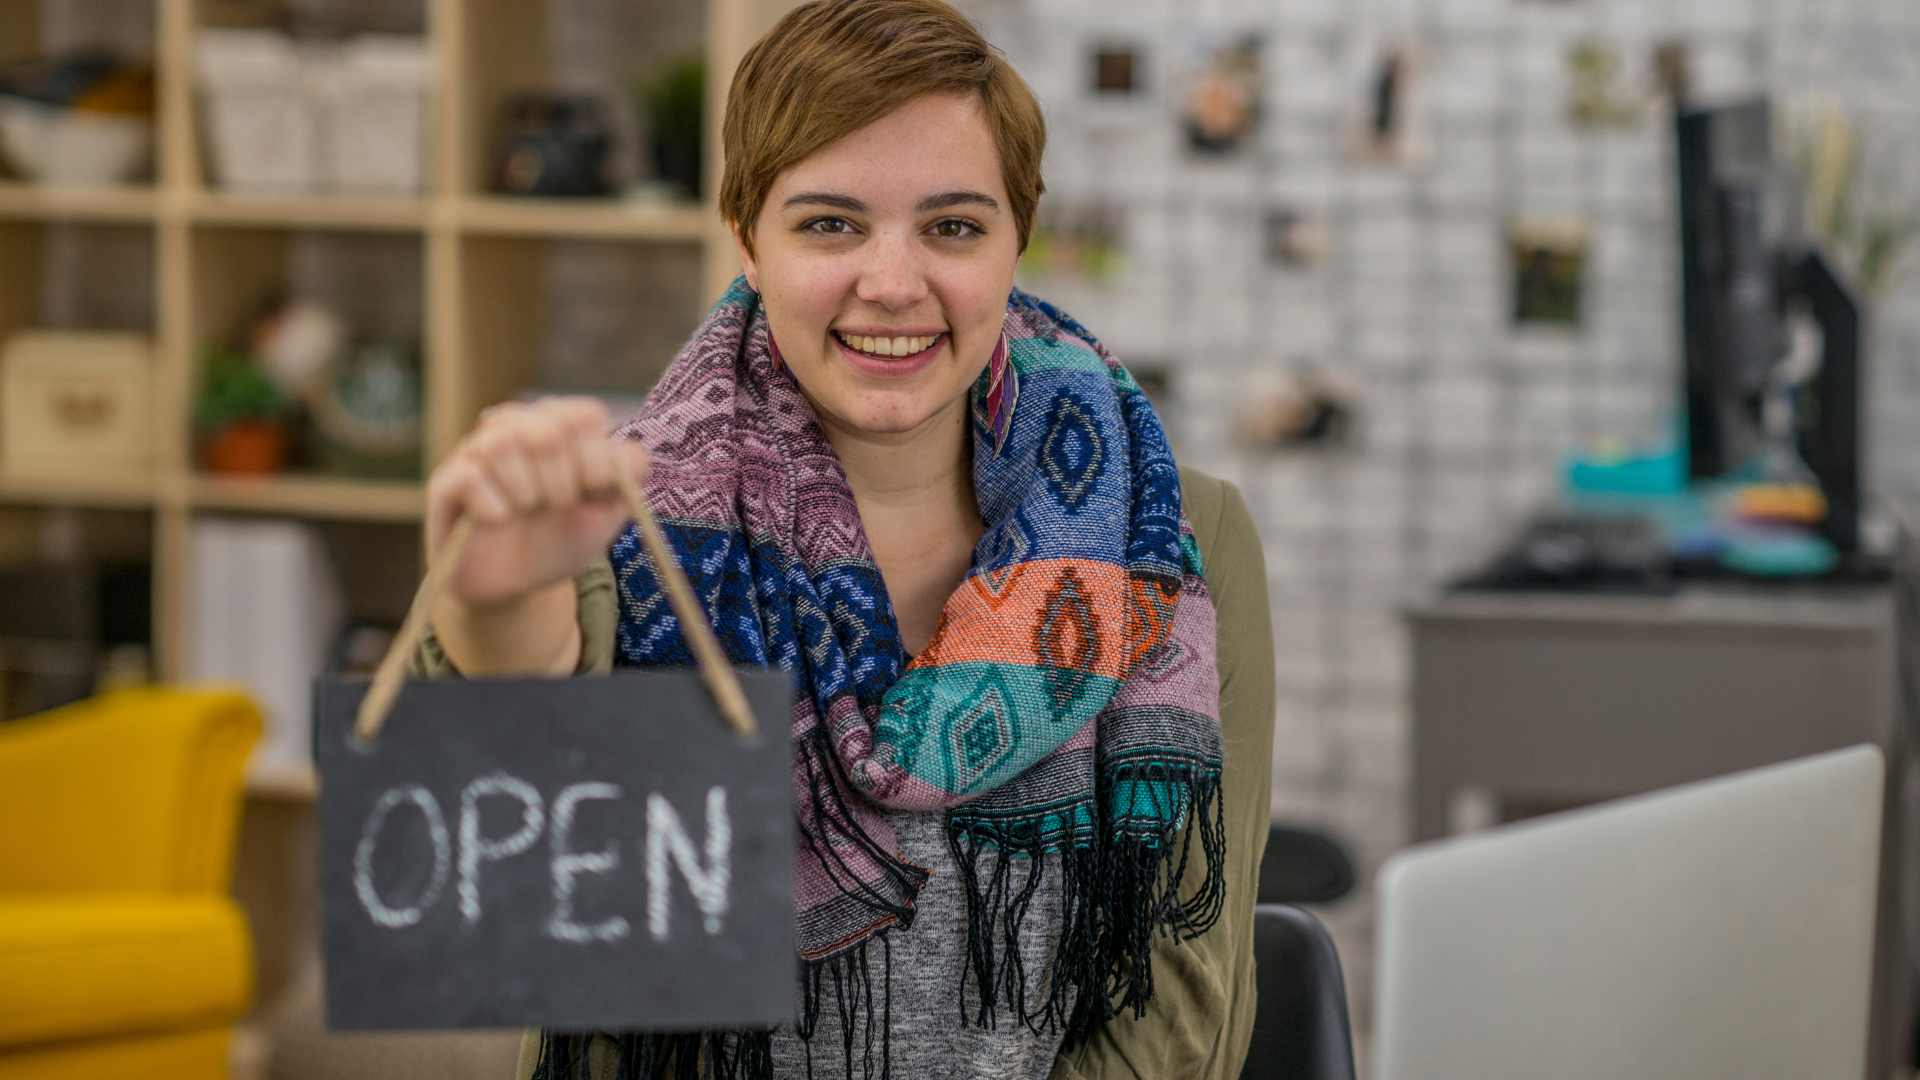 young entrepreneur holding an open sign